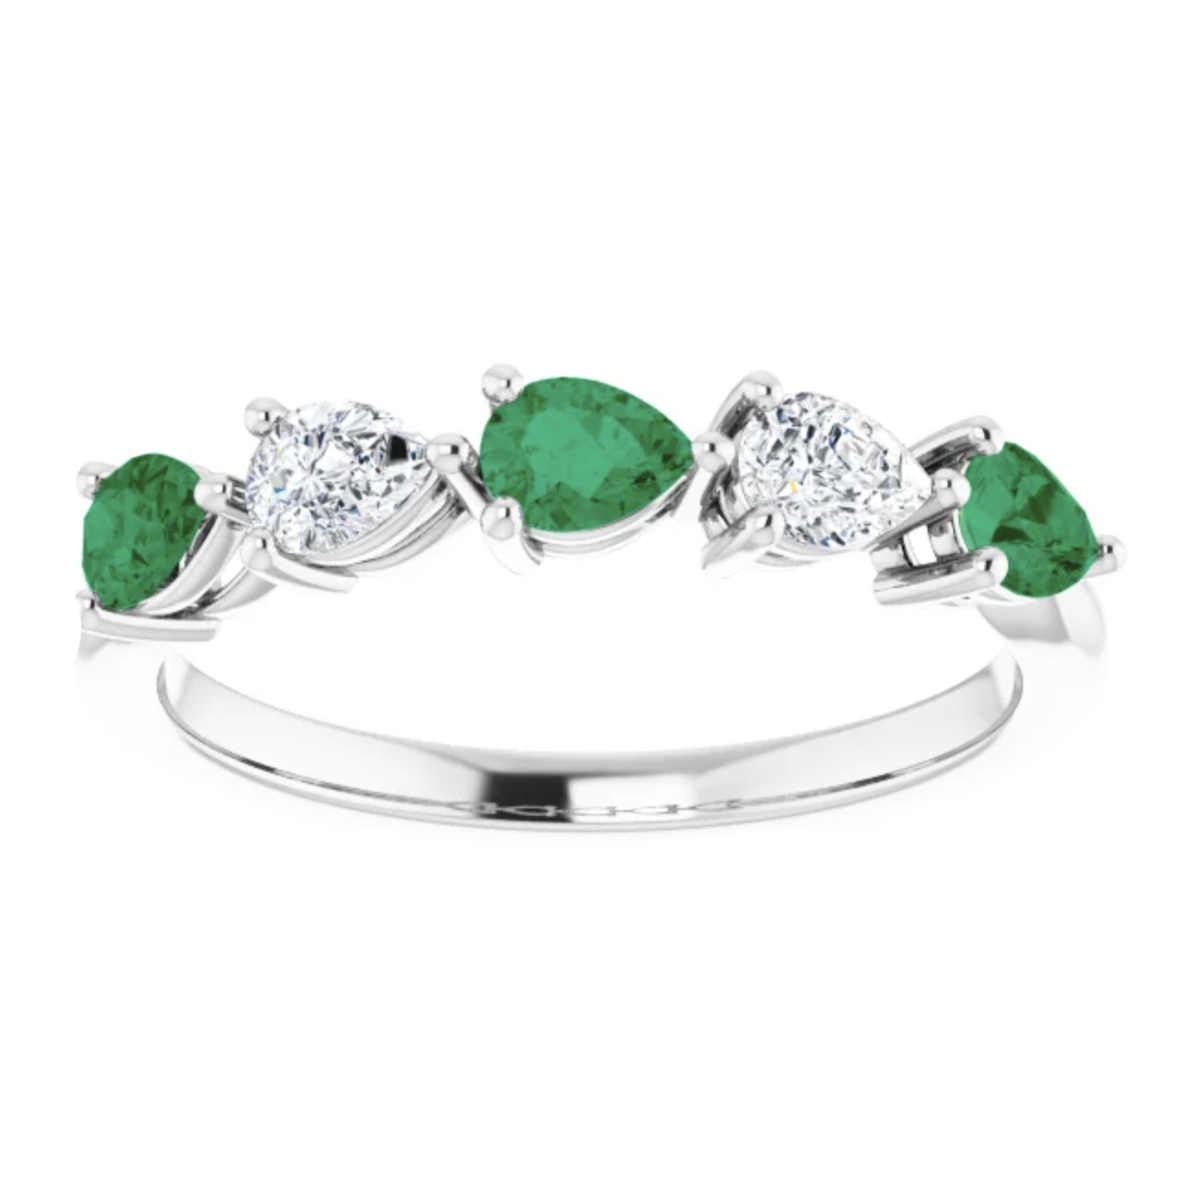 Emerald & Diamond 14K Gold Ring by Garden of Silver in Westhampton Beach. www.gardenofsilver.com